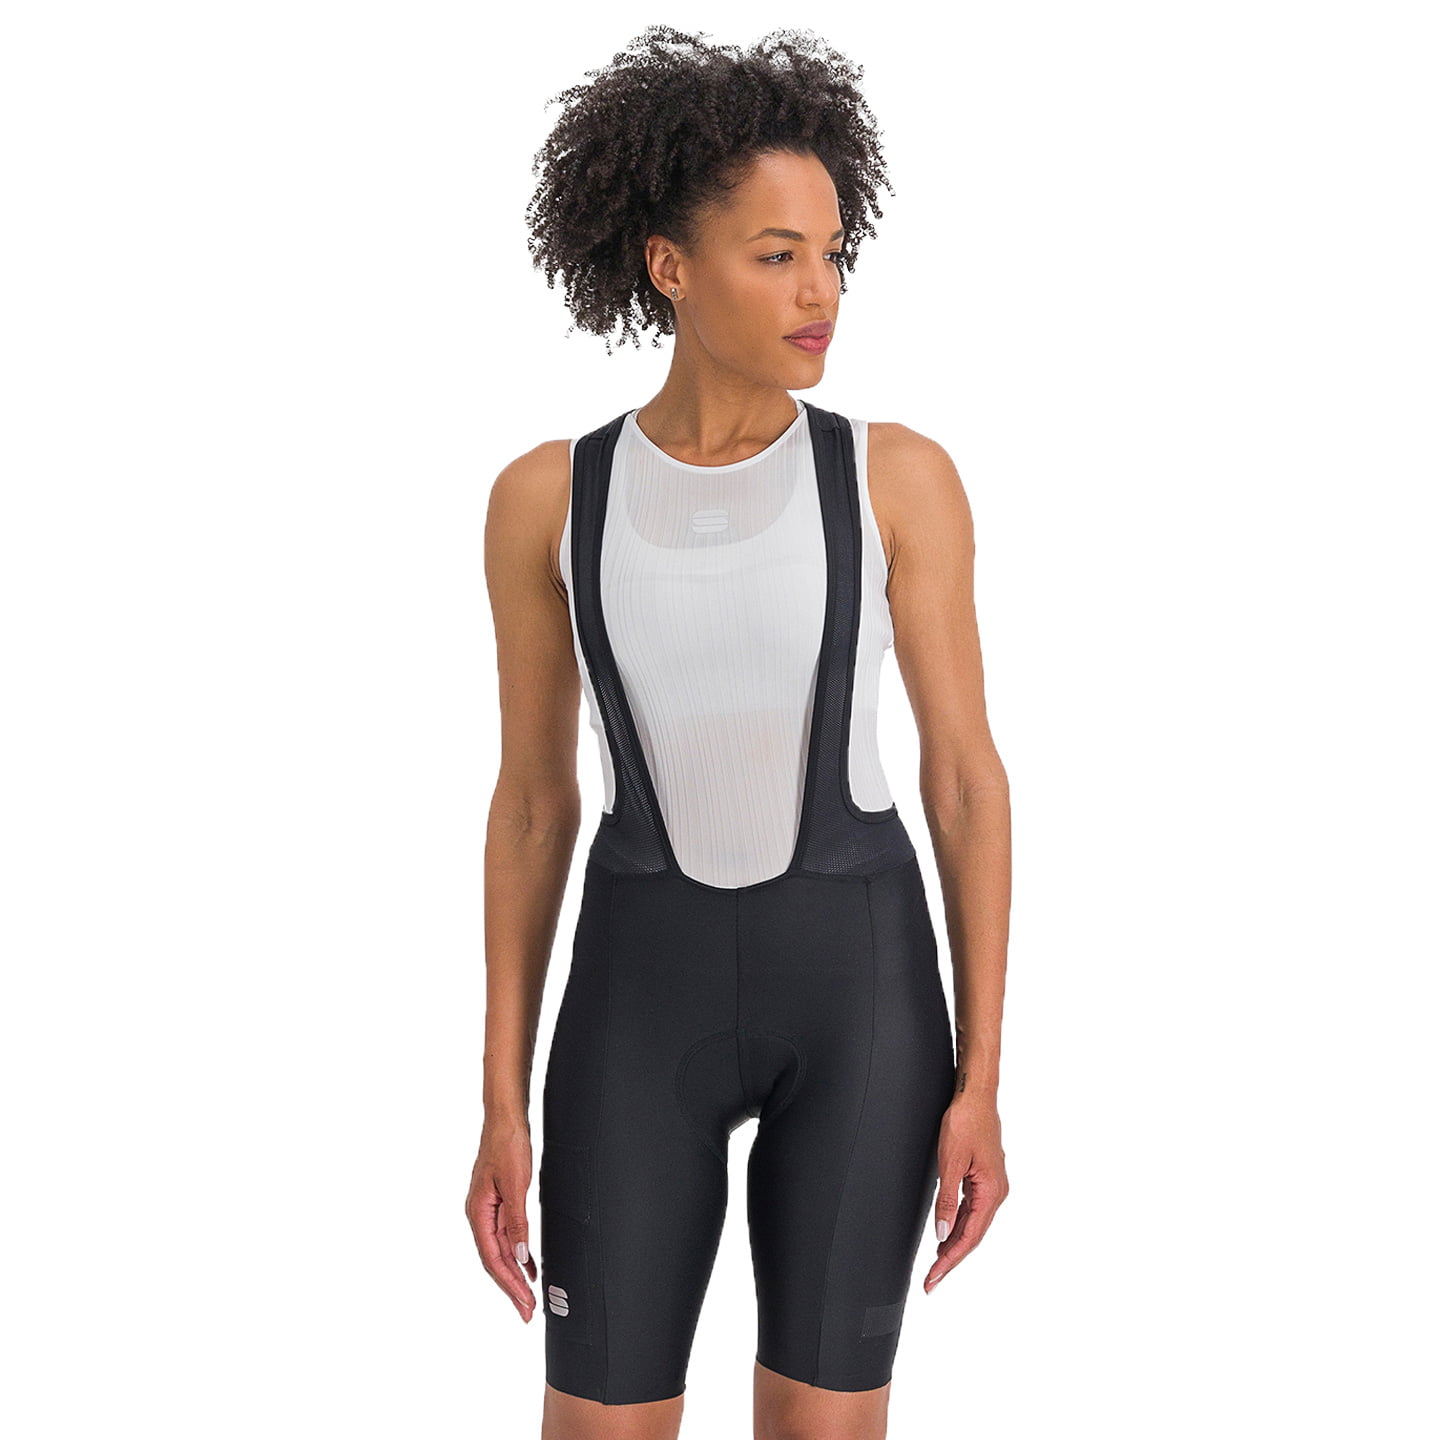 Women’s Bib Shorts, size L, Cycle shorts, Cycling clothing